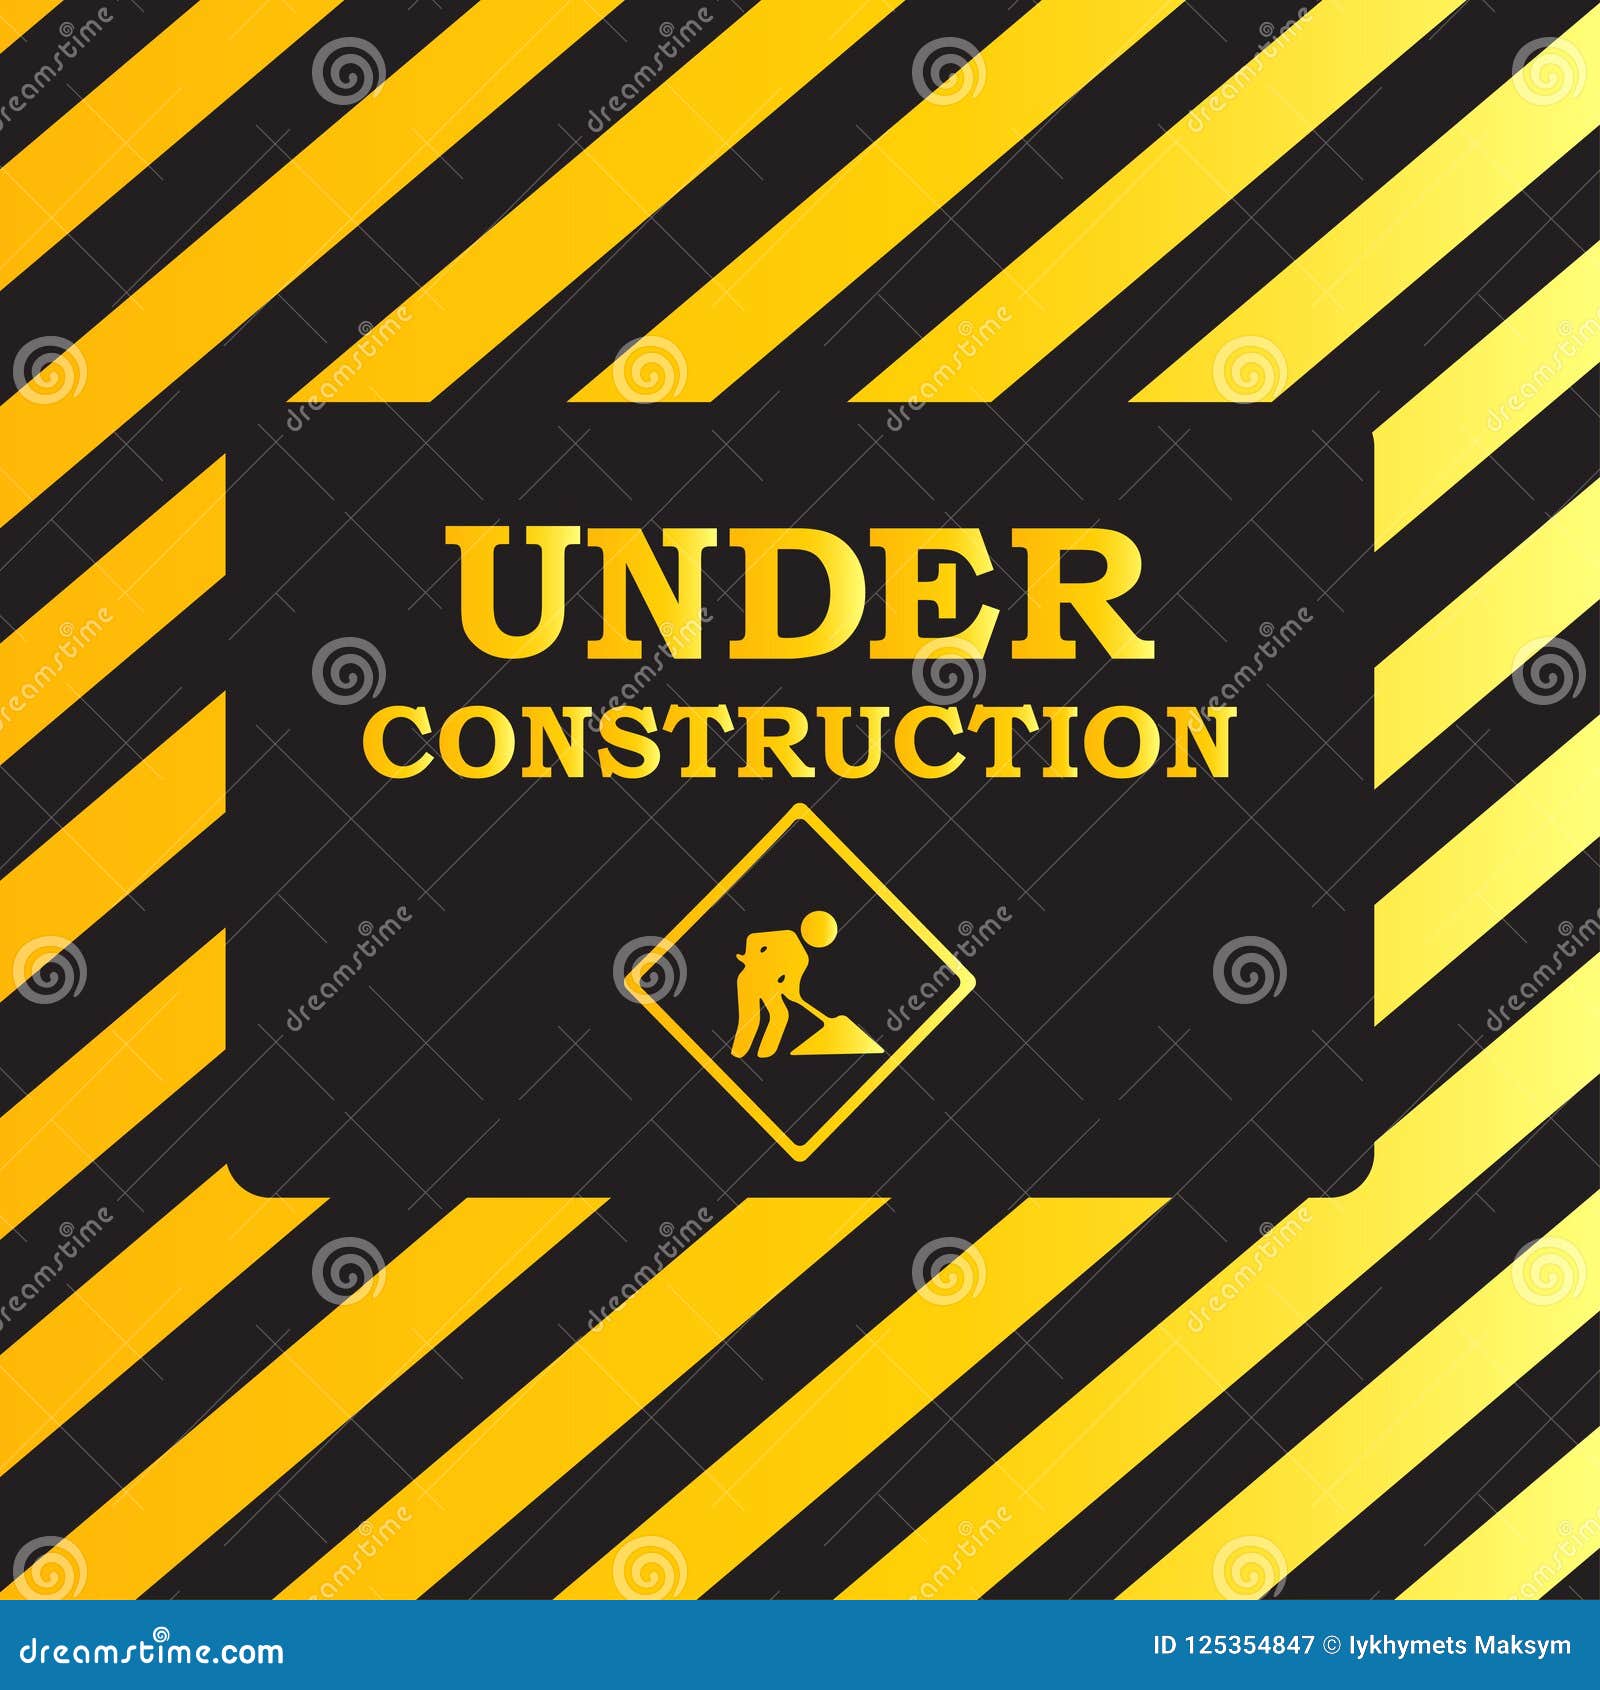 Under Construction Industrial Sign, Vector Illustration. Stock ...